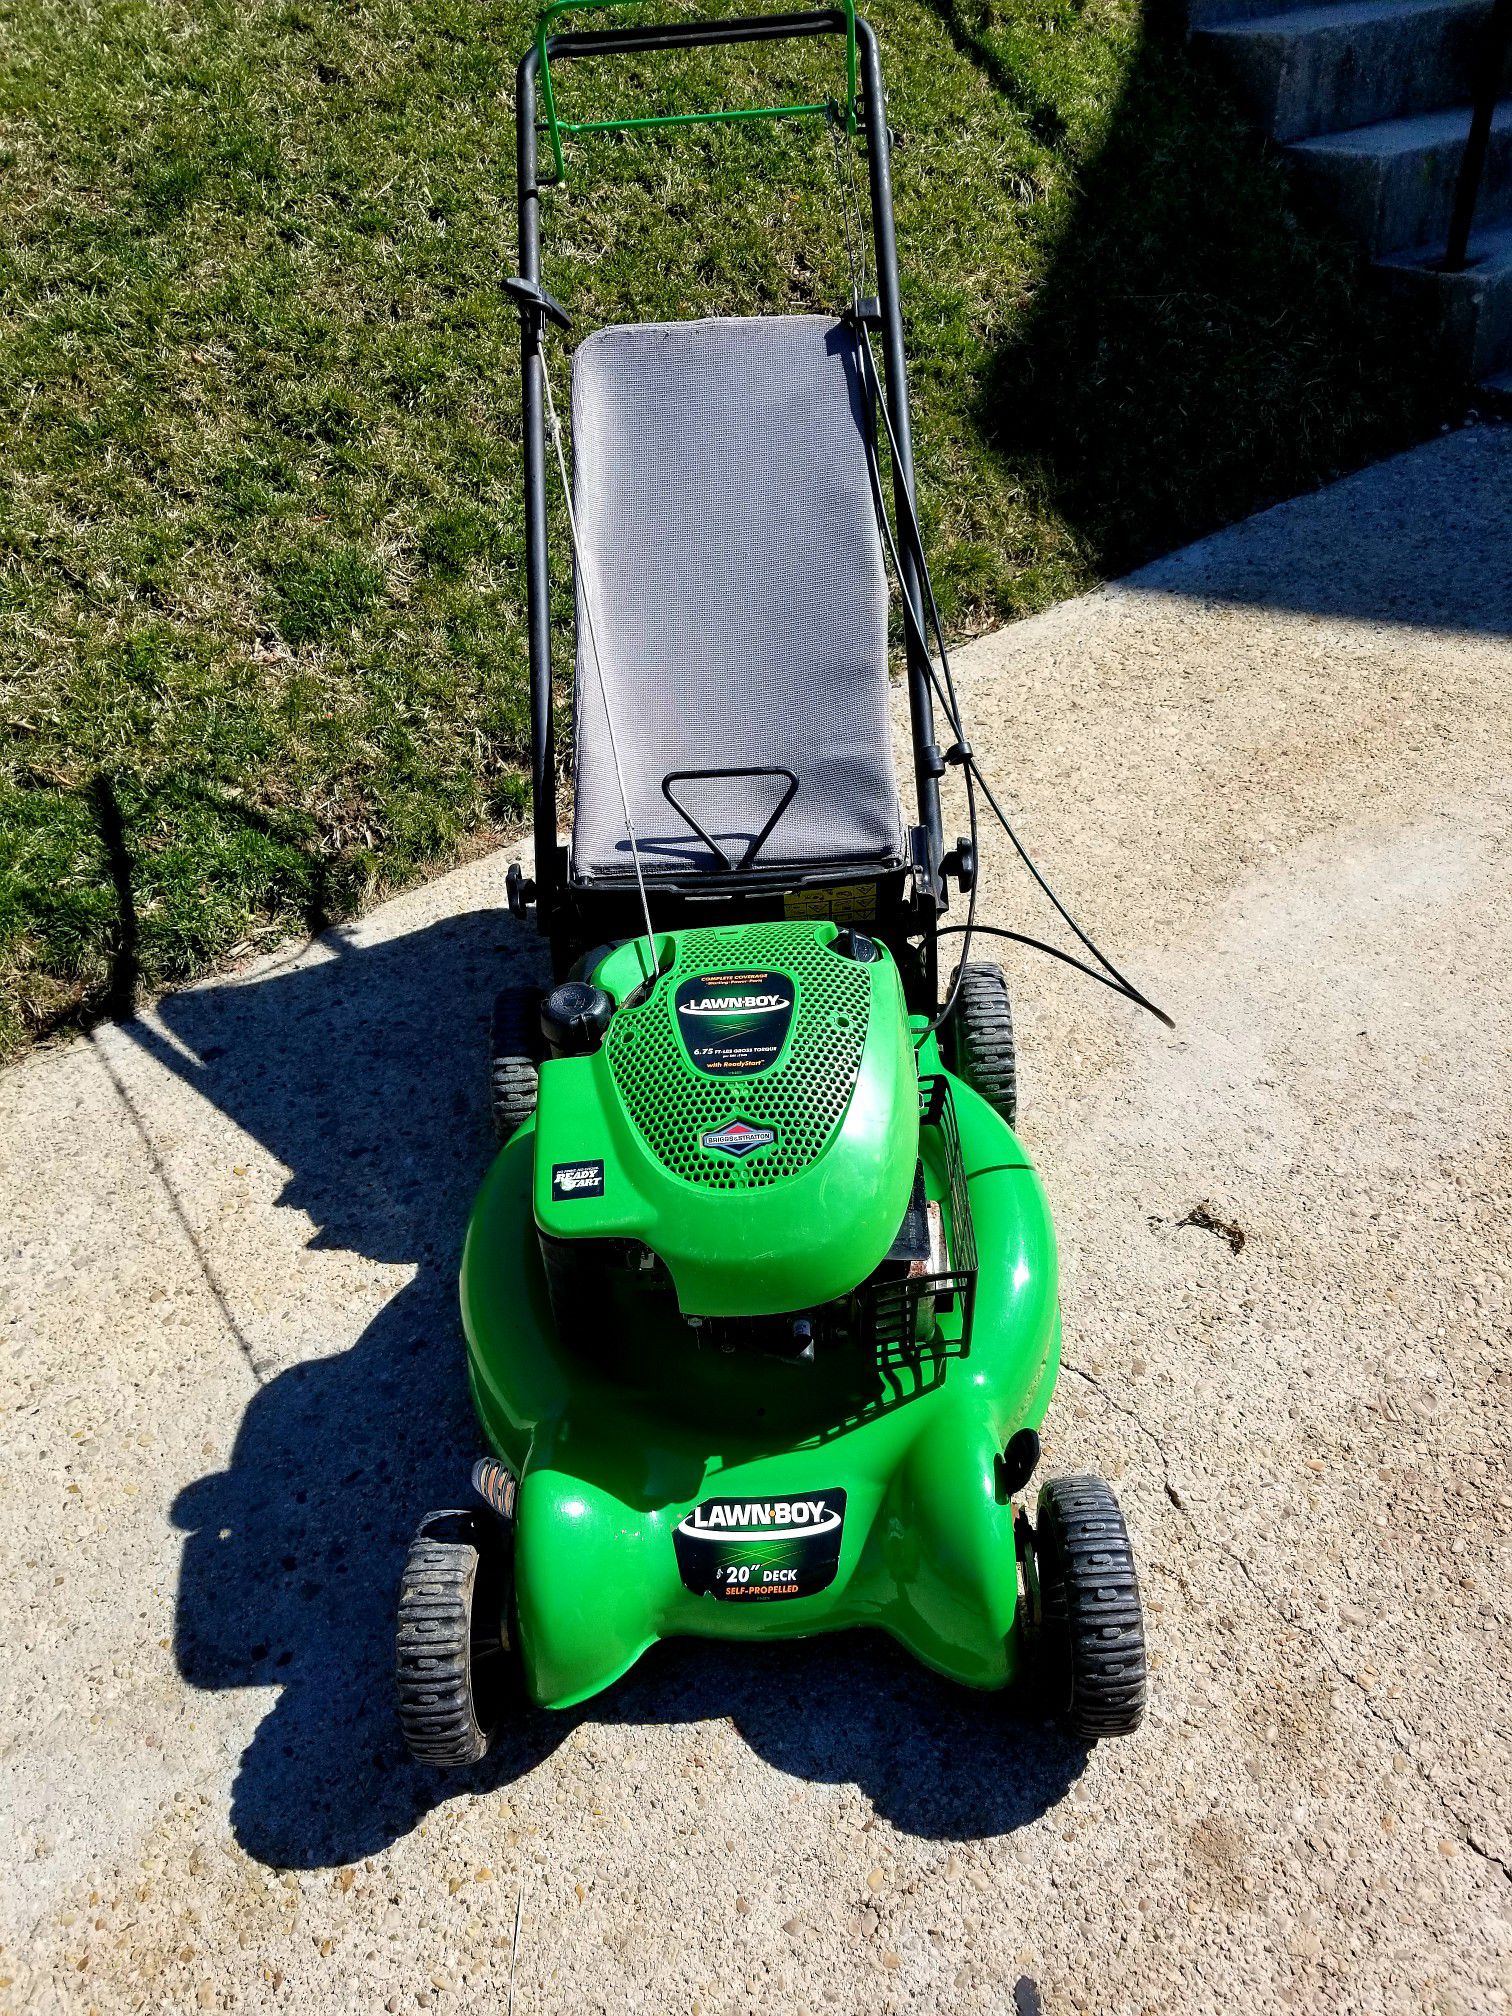 Lawn-Boy Insight 20"self-propelled lawn mower